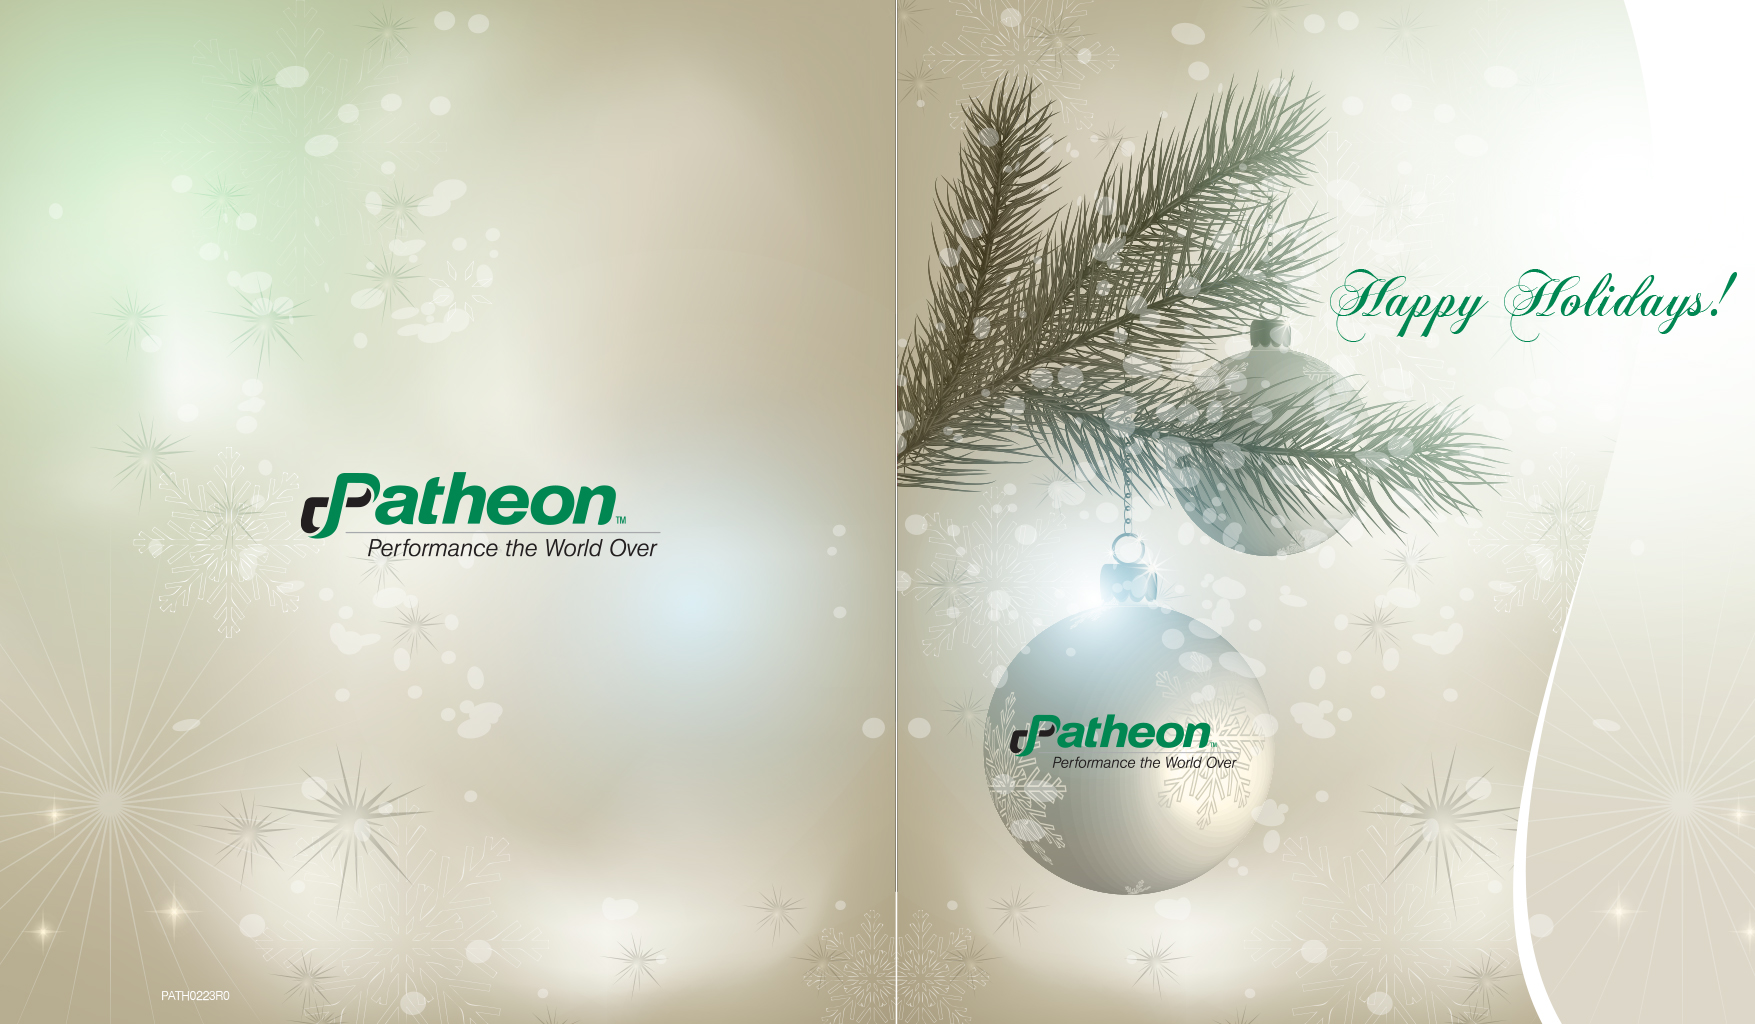 Patheon Holiday Card